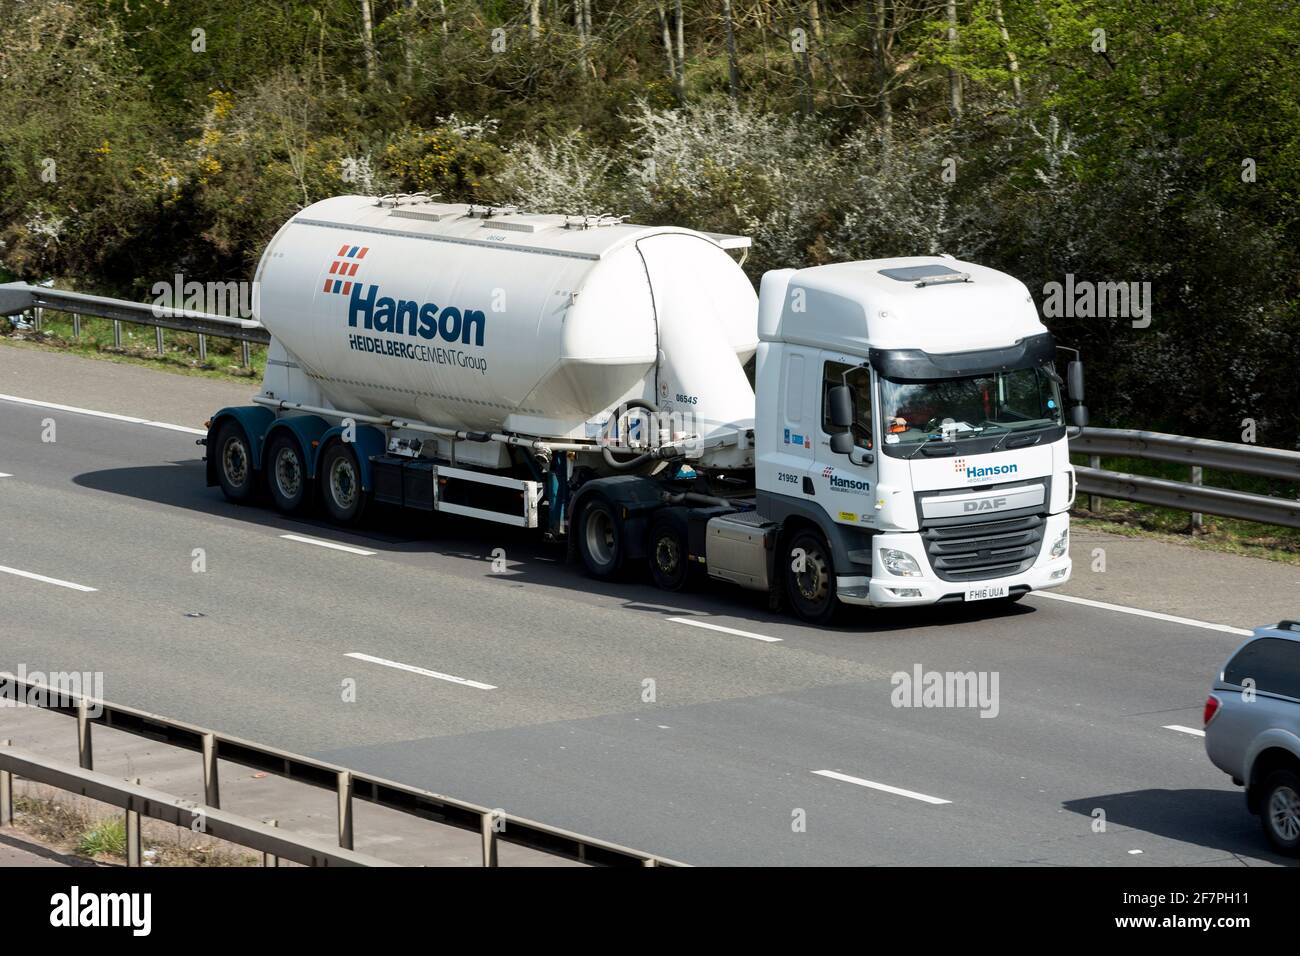 A DAF Hanson cement lorry on the M40 motorway, Warwickshire, UK Stock Photo